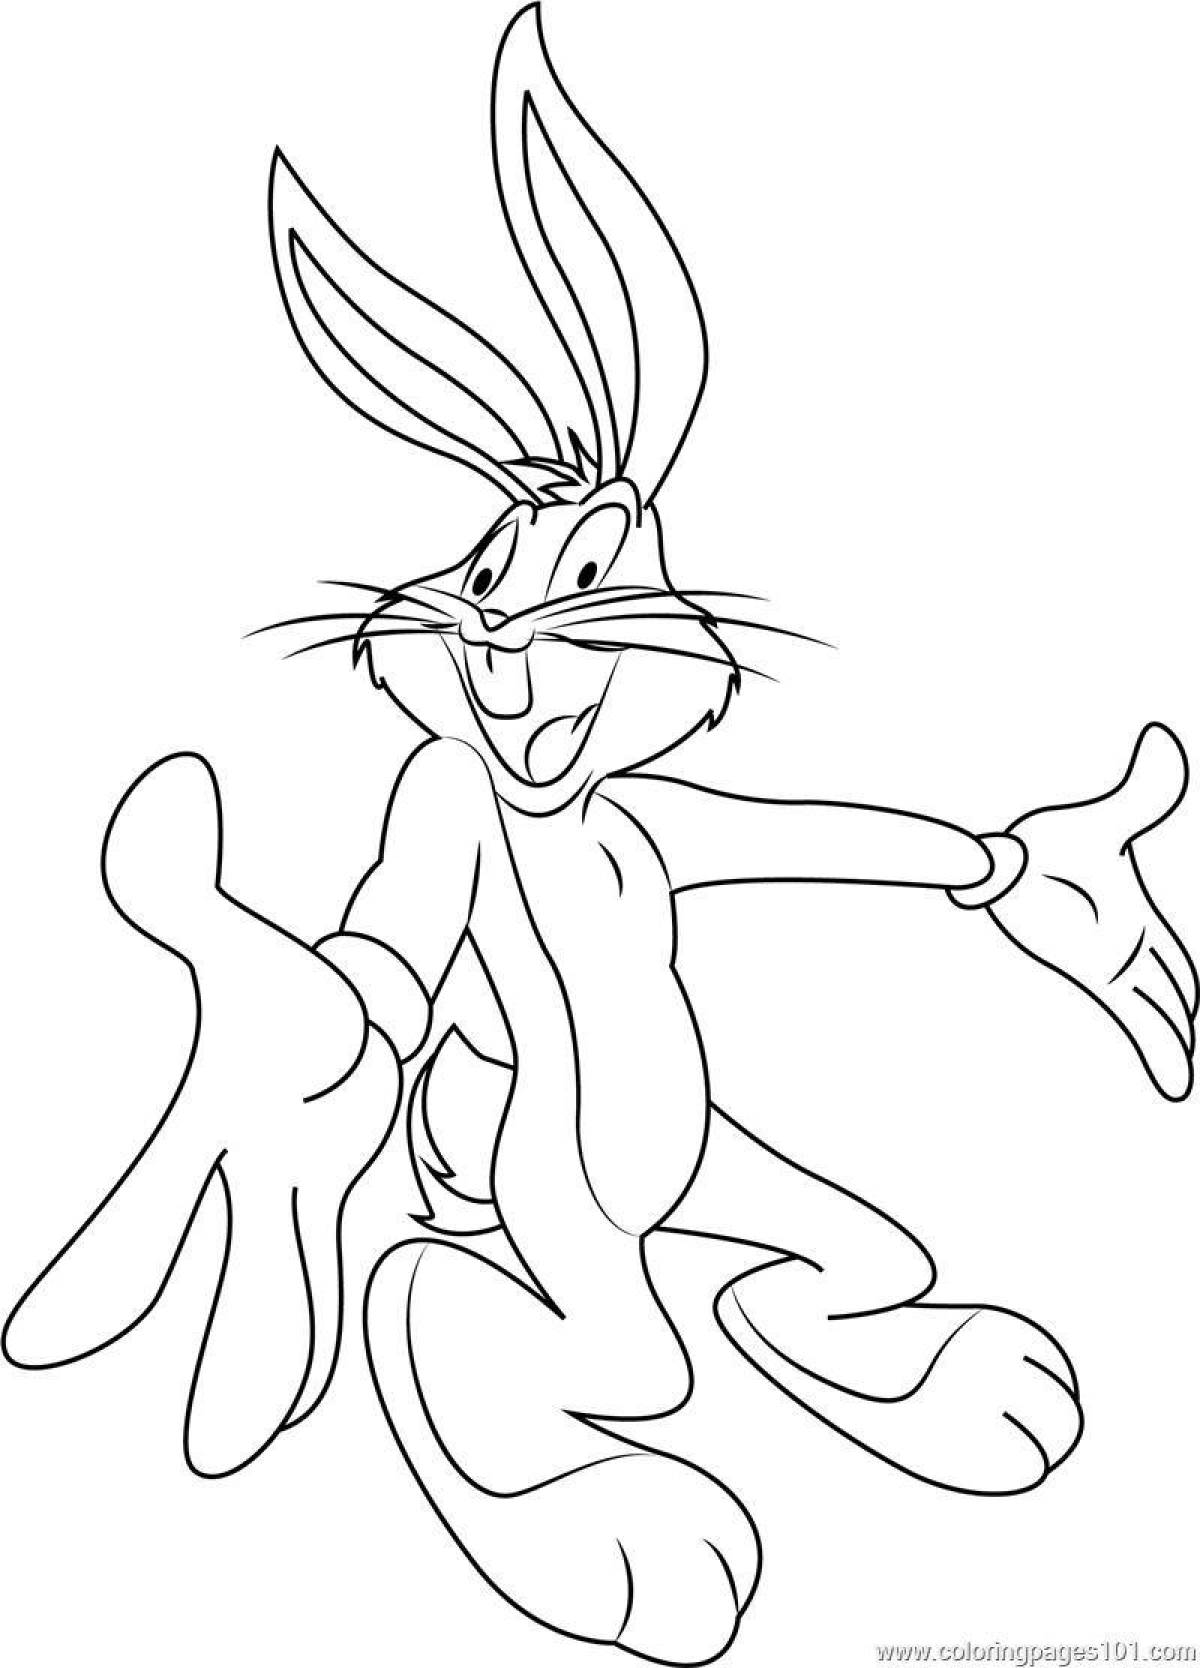 Coloring roger rabbit